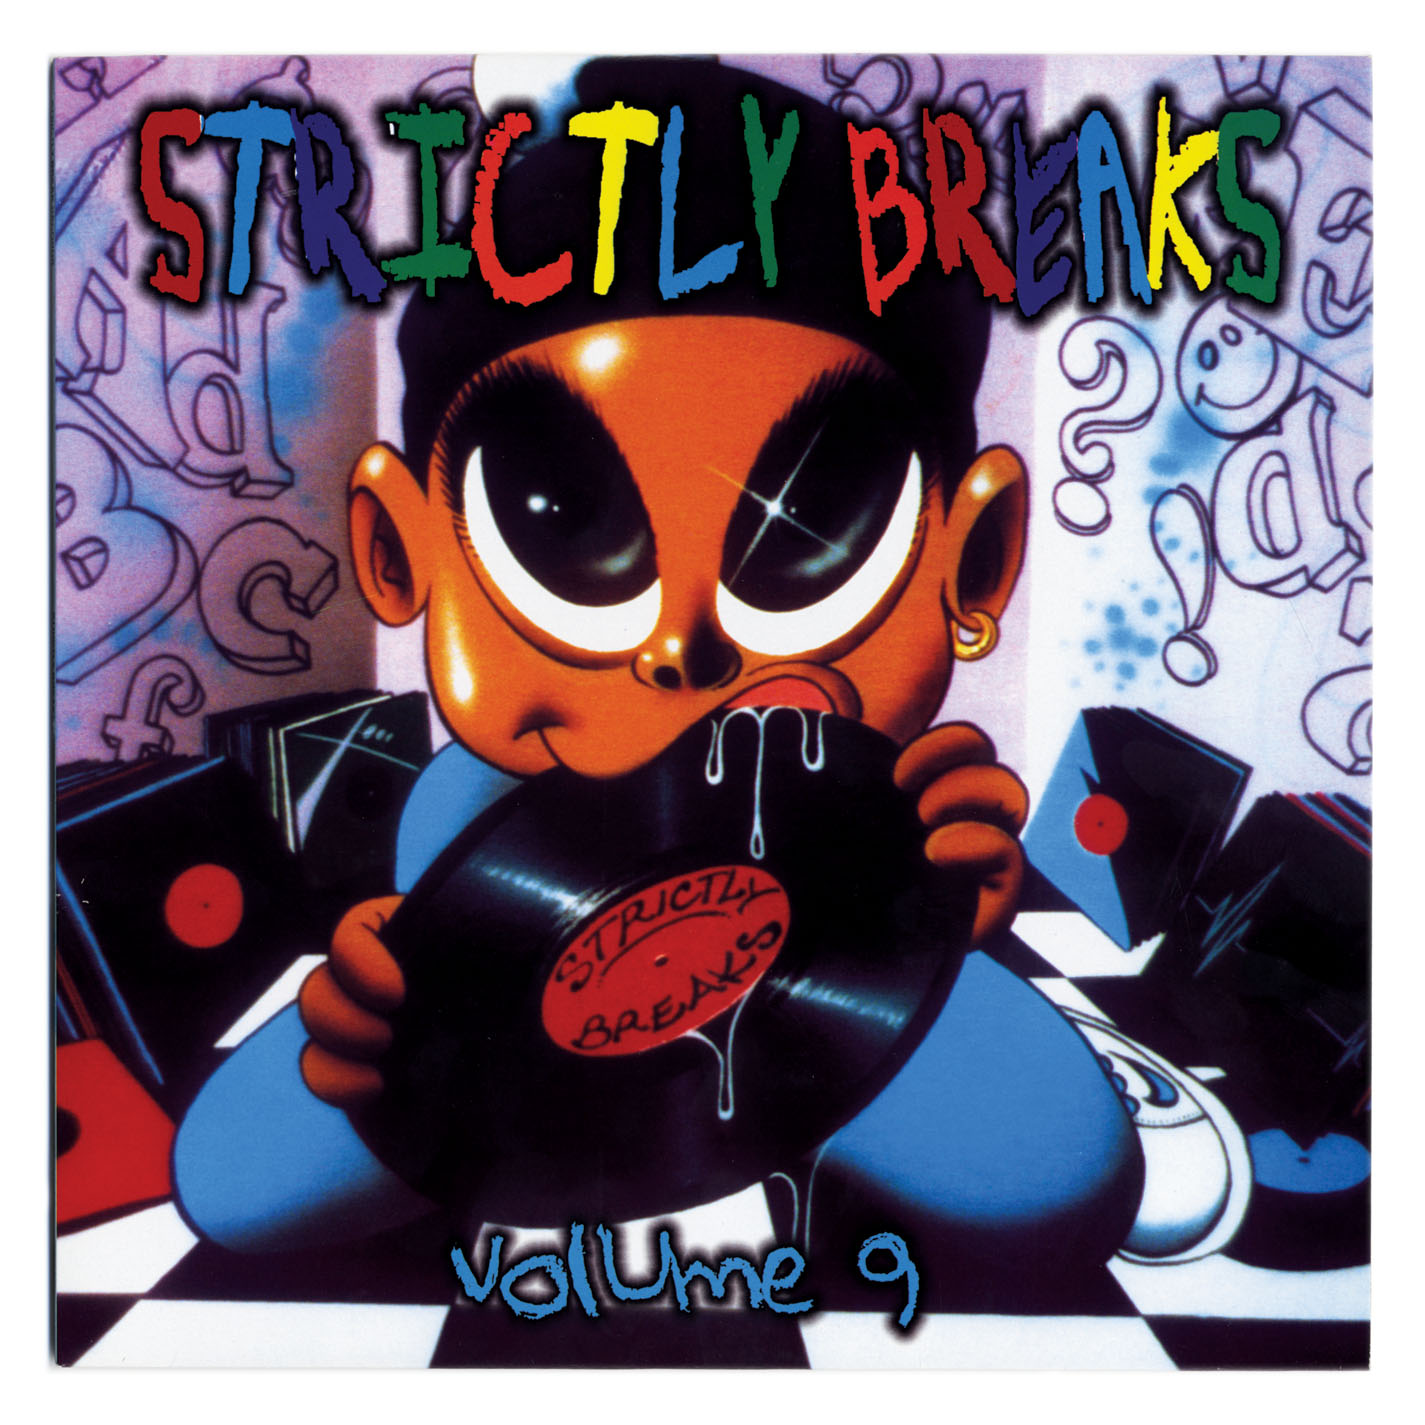 Strictly Breaks Volume 9 (2000) (CD) (320)